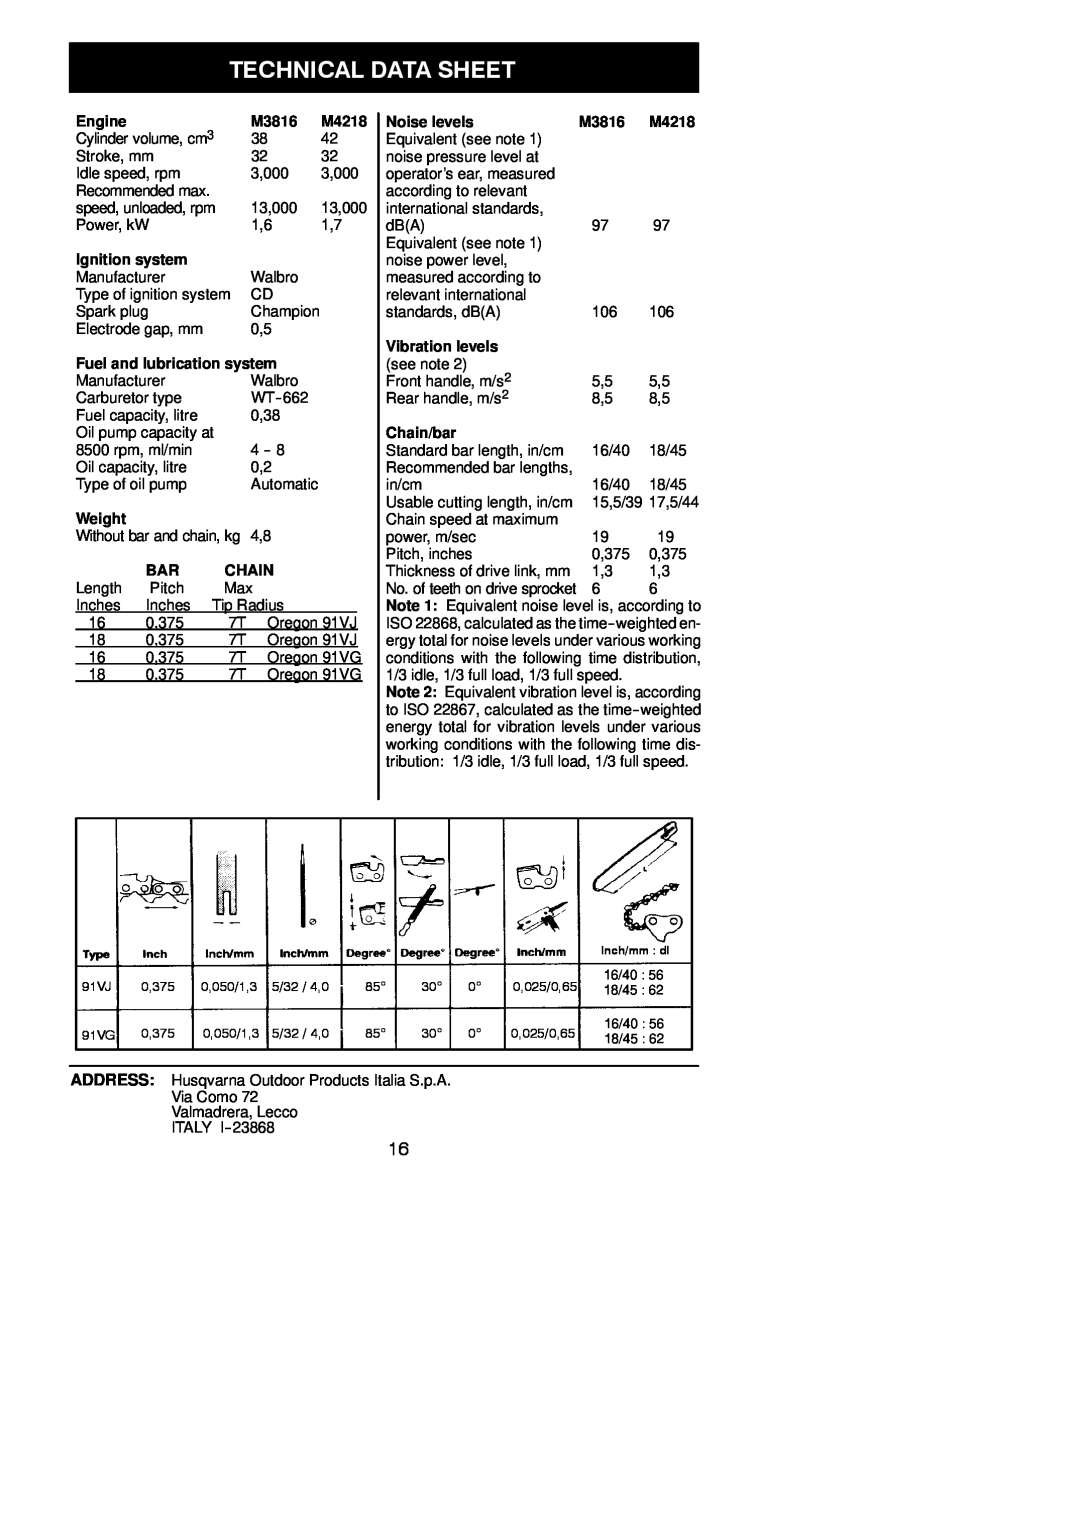 McCulloch M3816, M4218 instruction manual Technical Data Sheet, 91VJ 0,375 0,050/1,3 5/32 / 4,0 85 30 0 0,025/0,65 18/45 